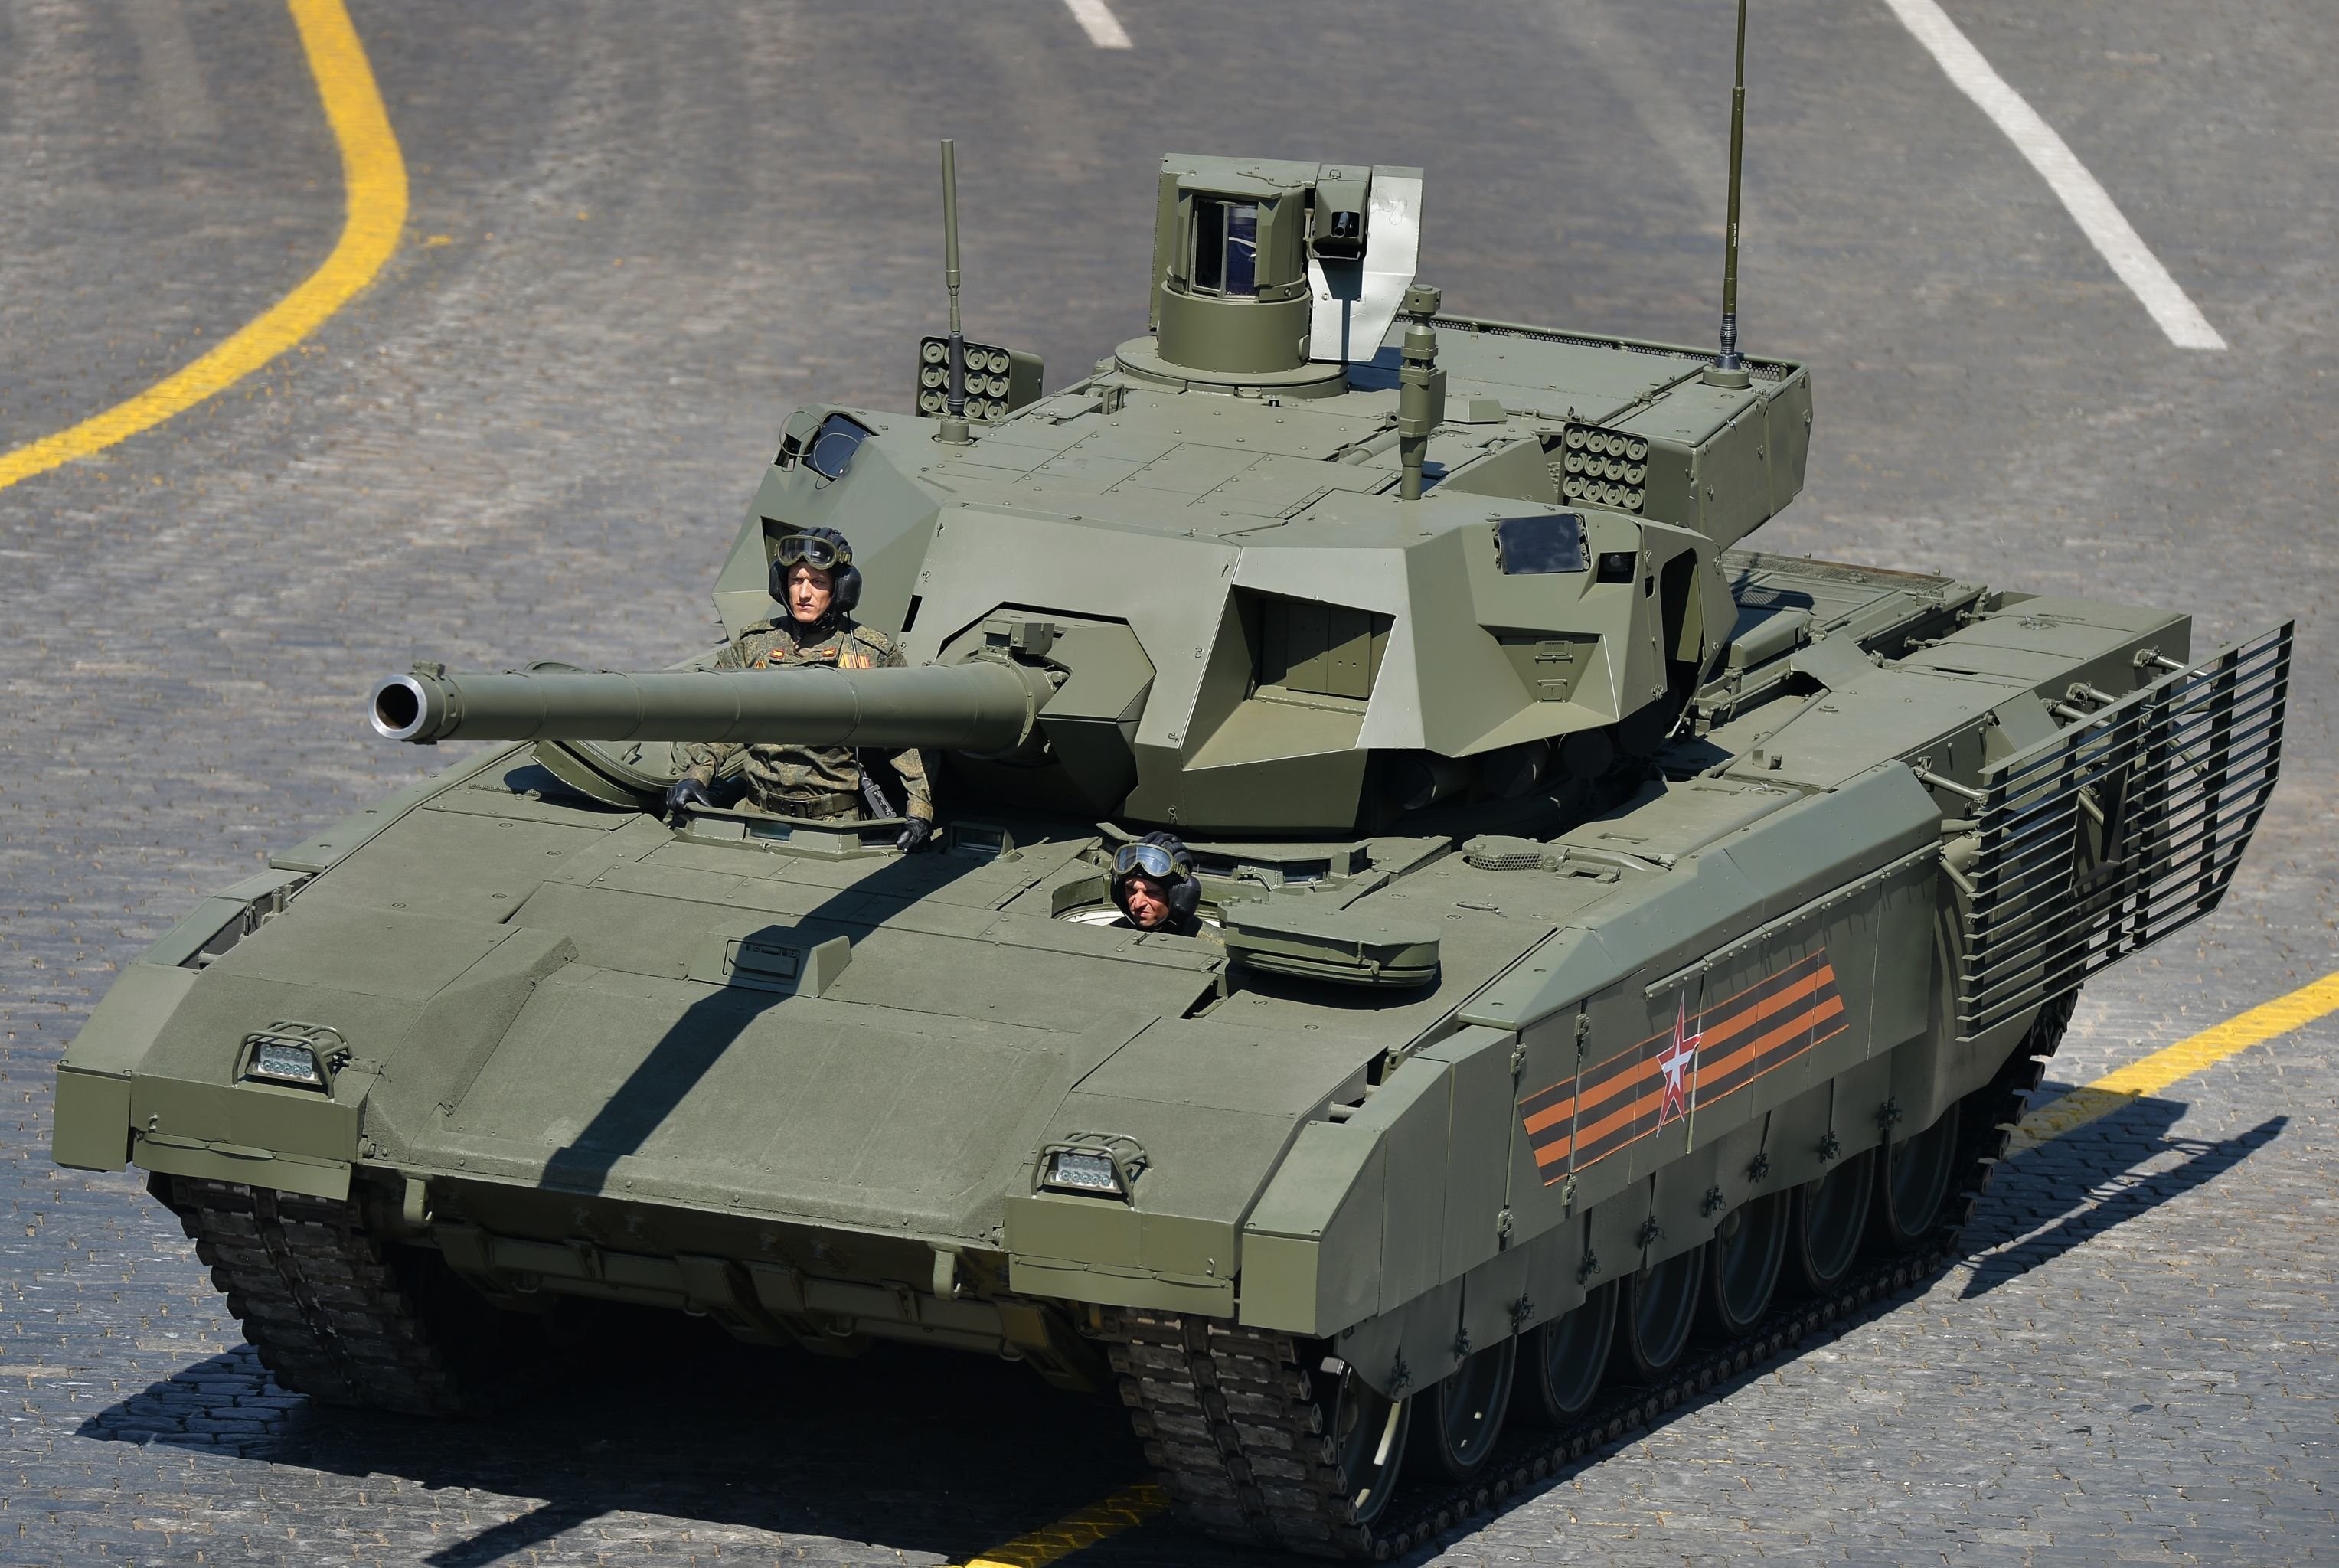 Как называется новый танк. T14 танк Armata. Т-14 Армата. Российский танк т-14 "Армата". T 14 Армата танк.